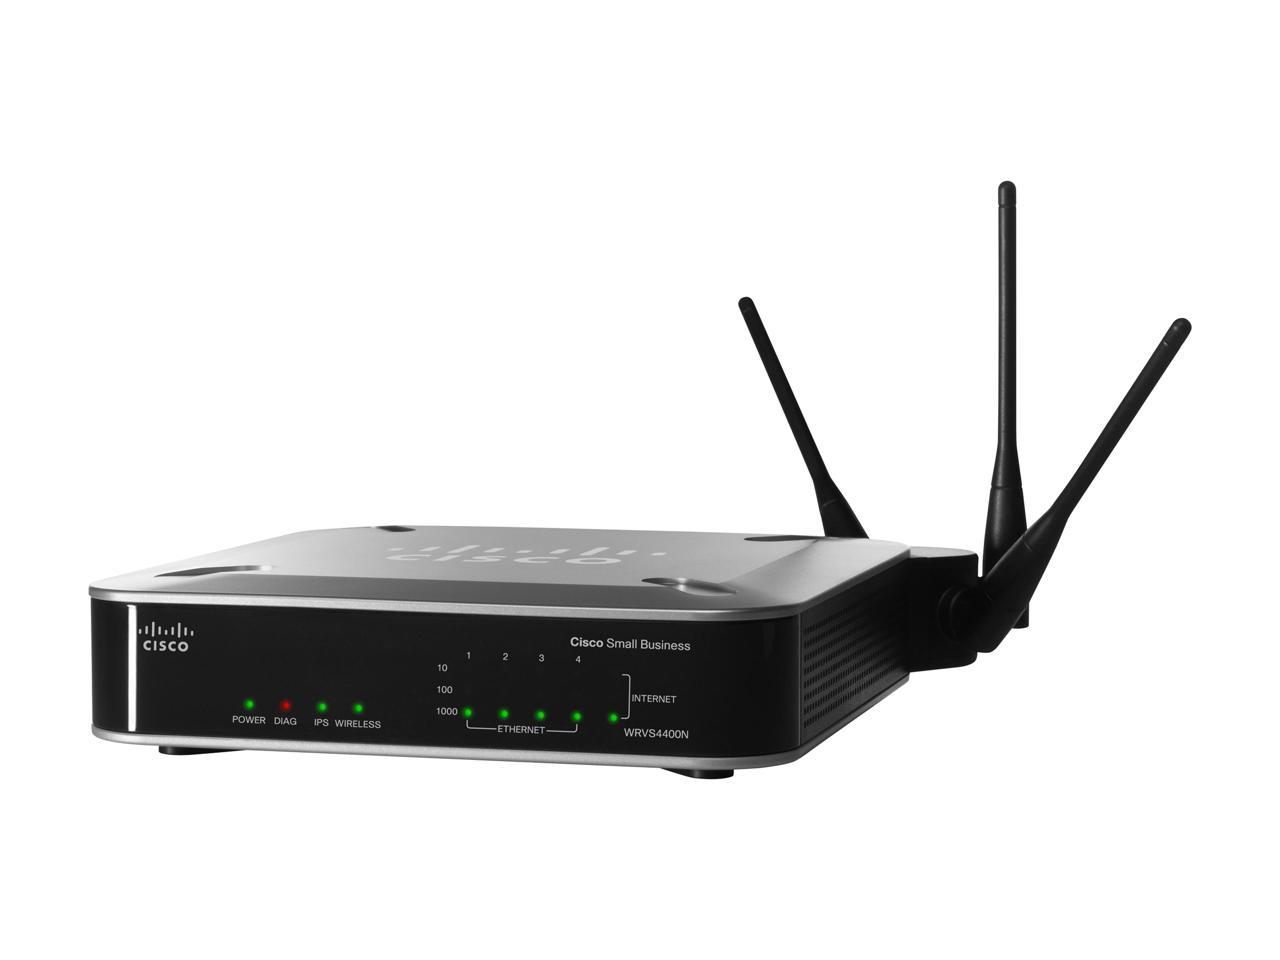 cisco wrvs4400n wireless n gigabit security router vpn v2.0 price